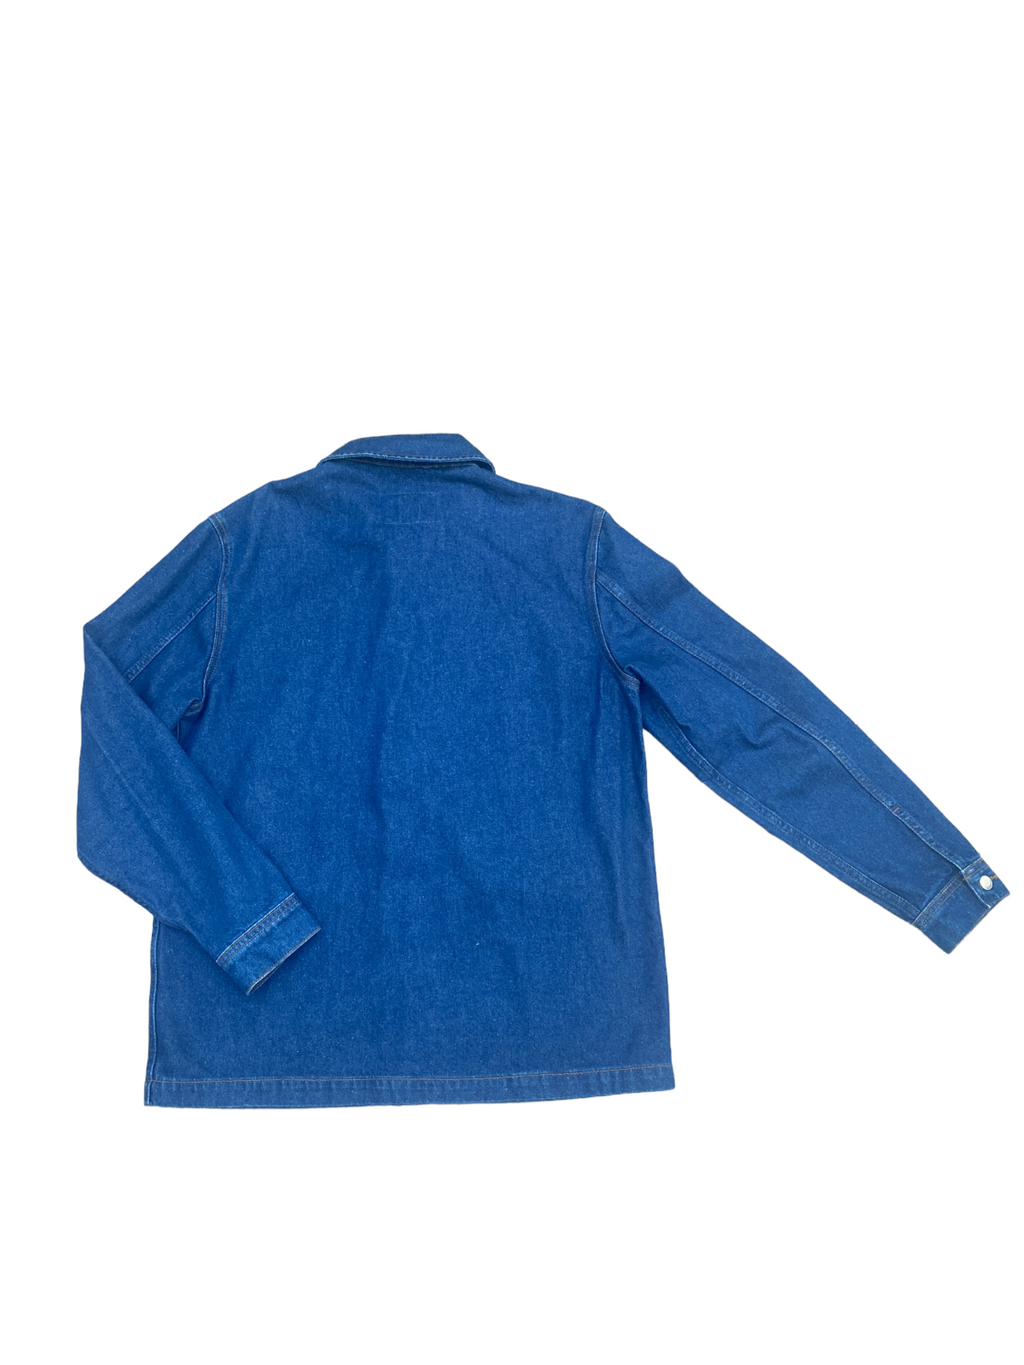 Blue Raw Denim Jacket